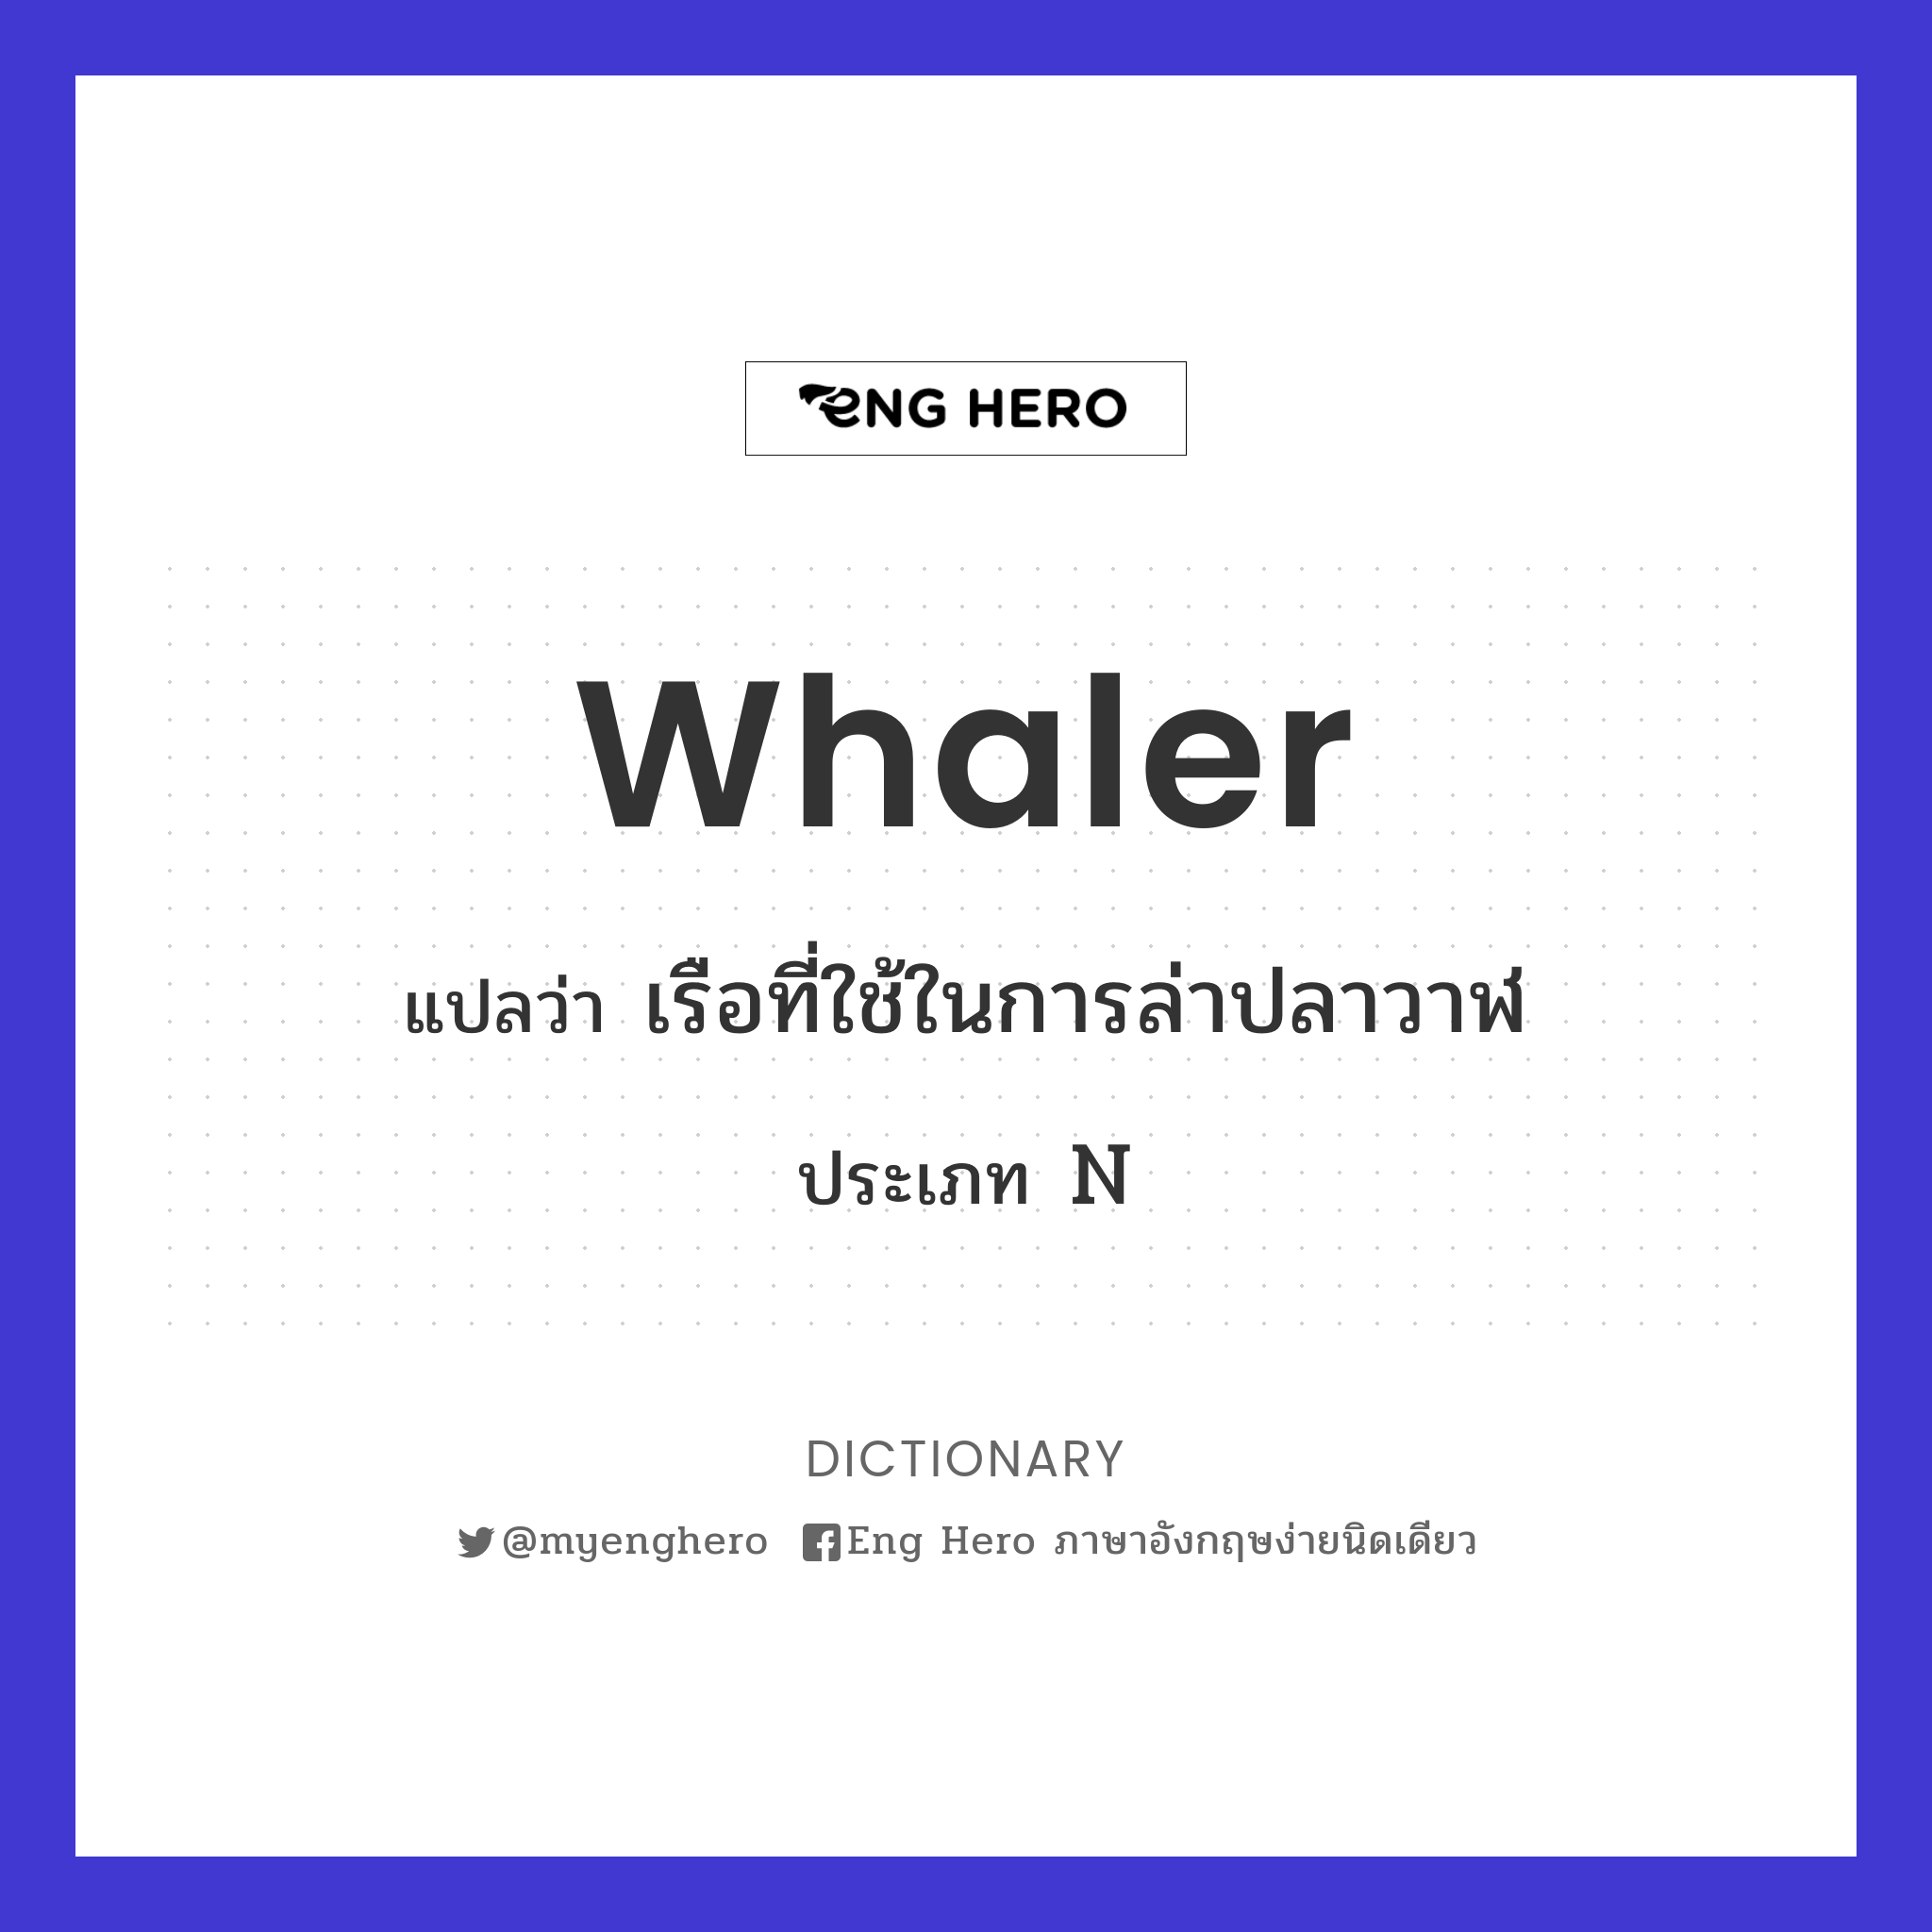 whaler